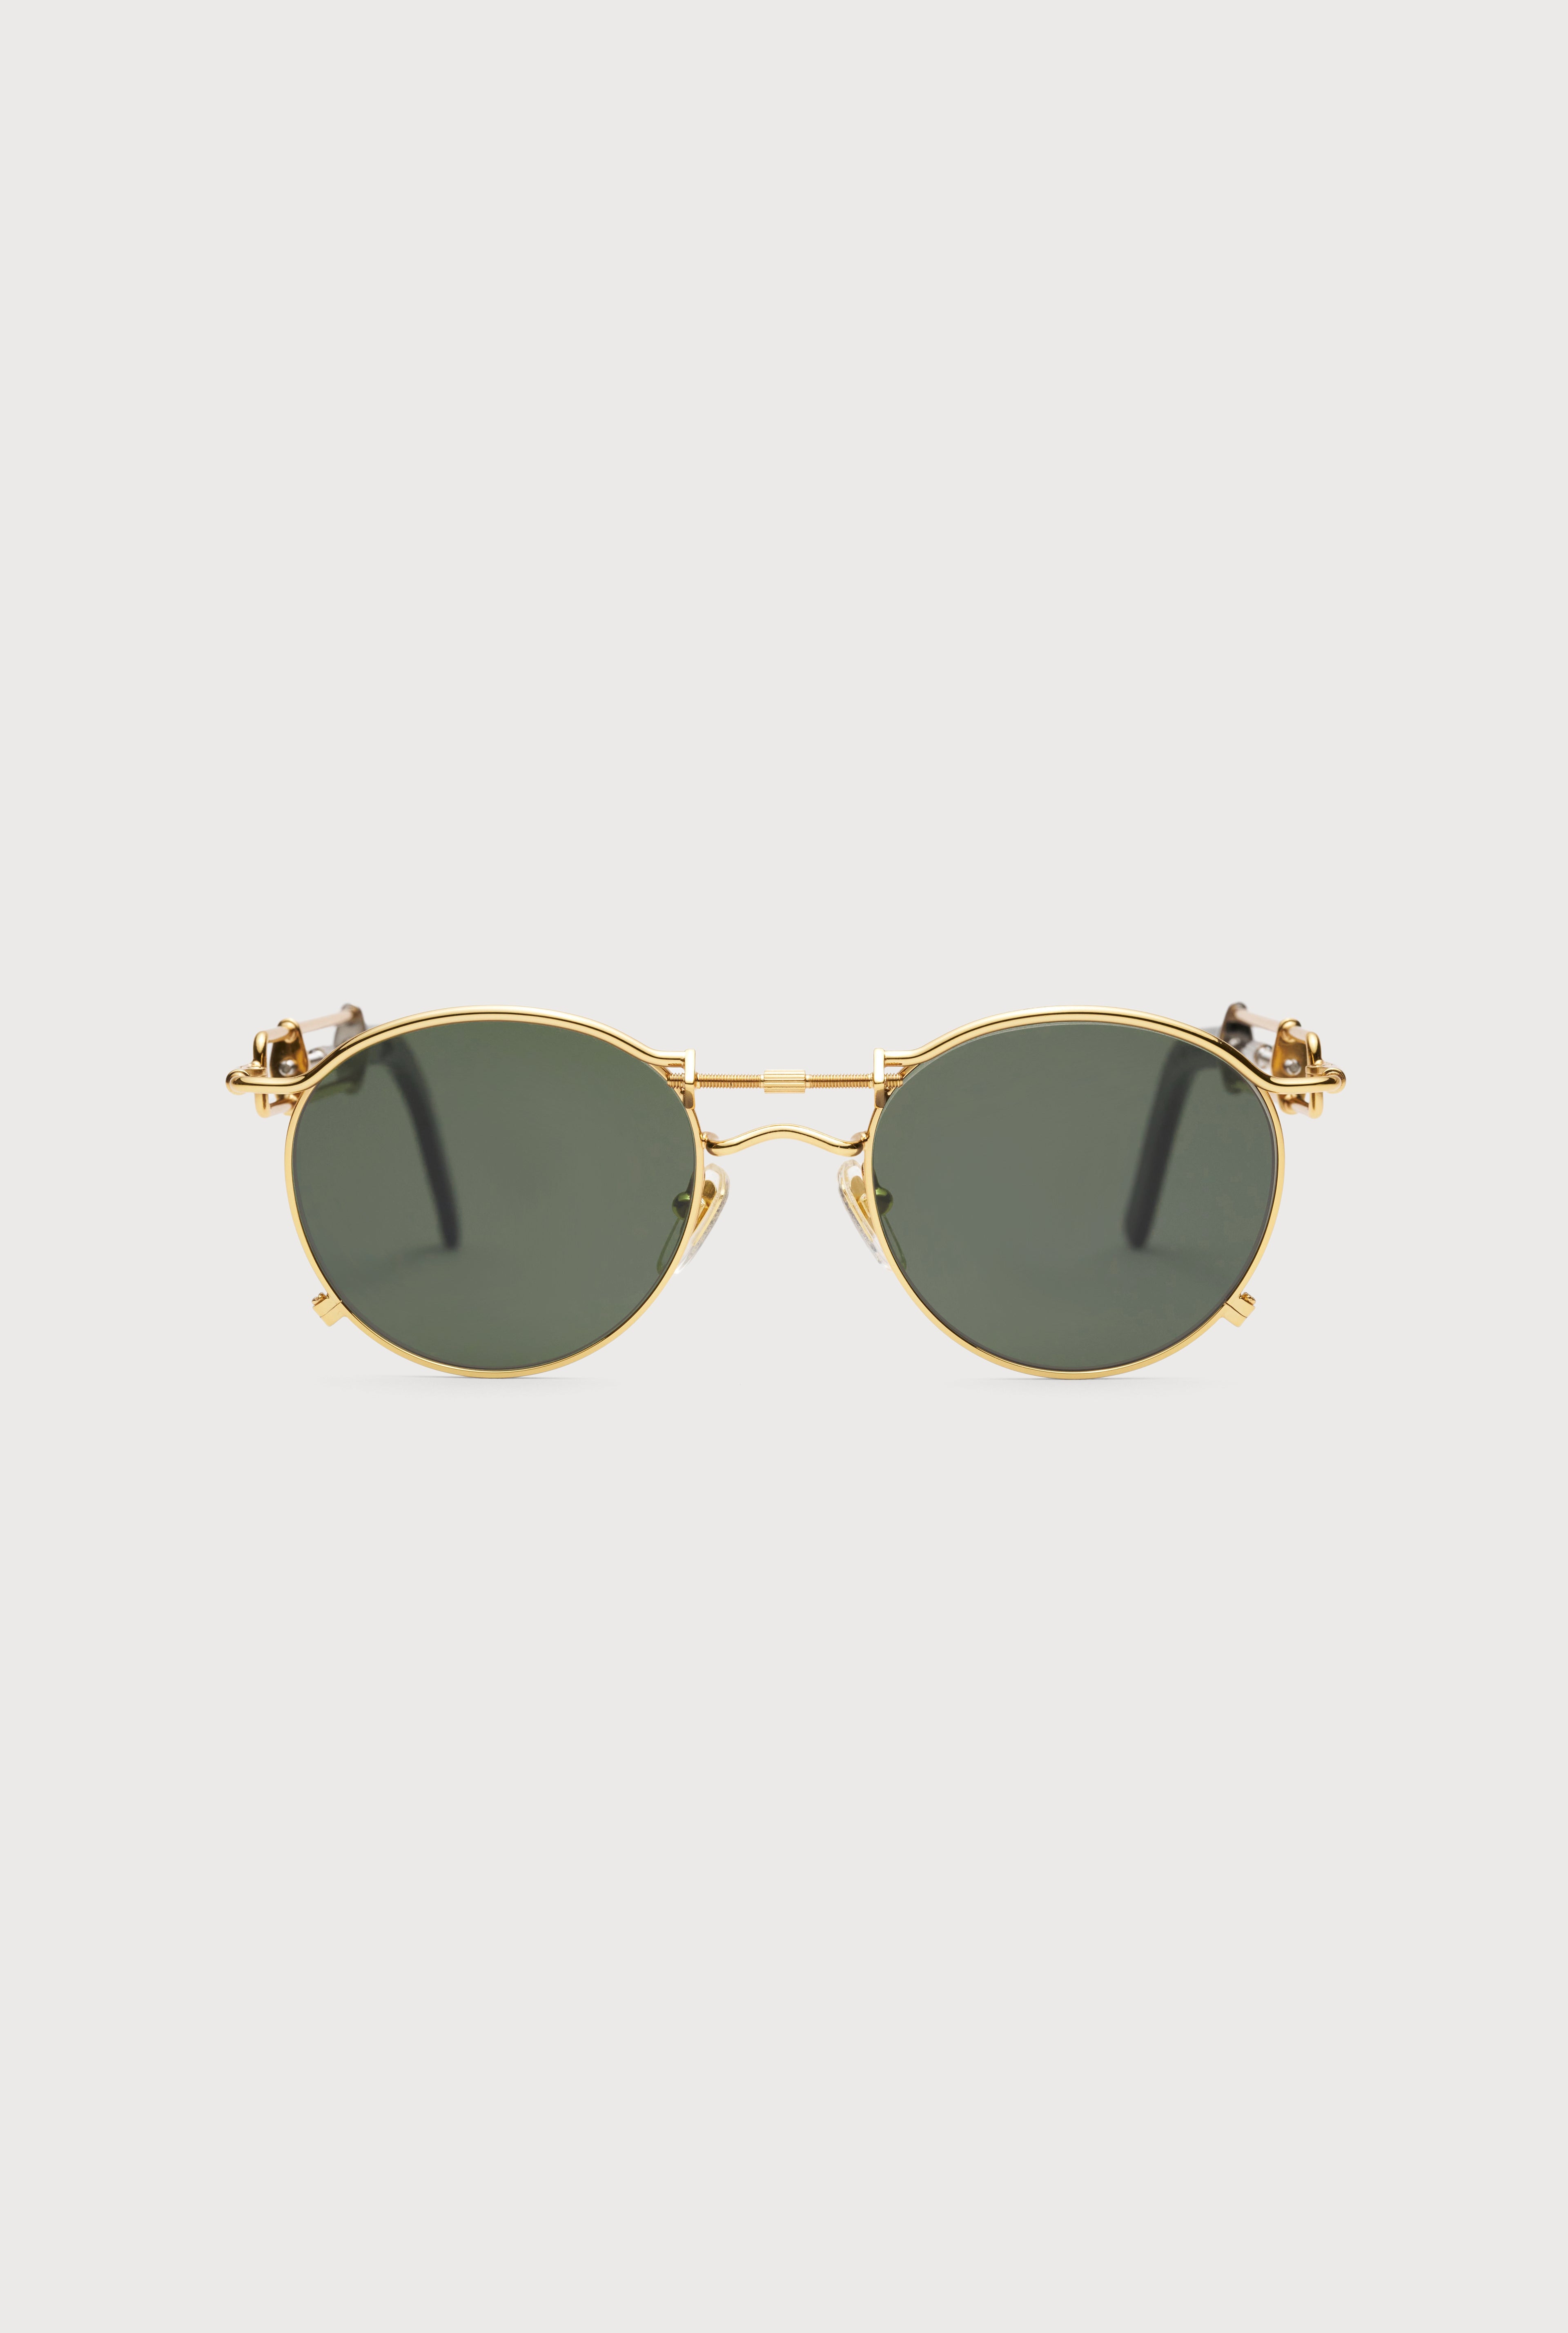 The Gold 56-0174 Sunglasses